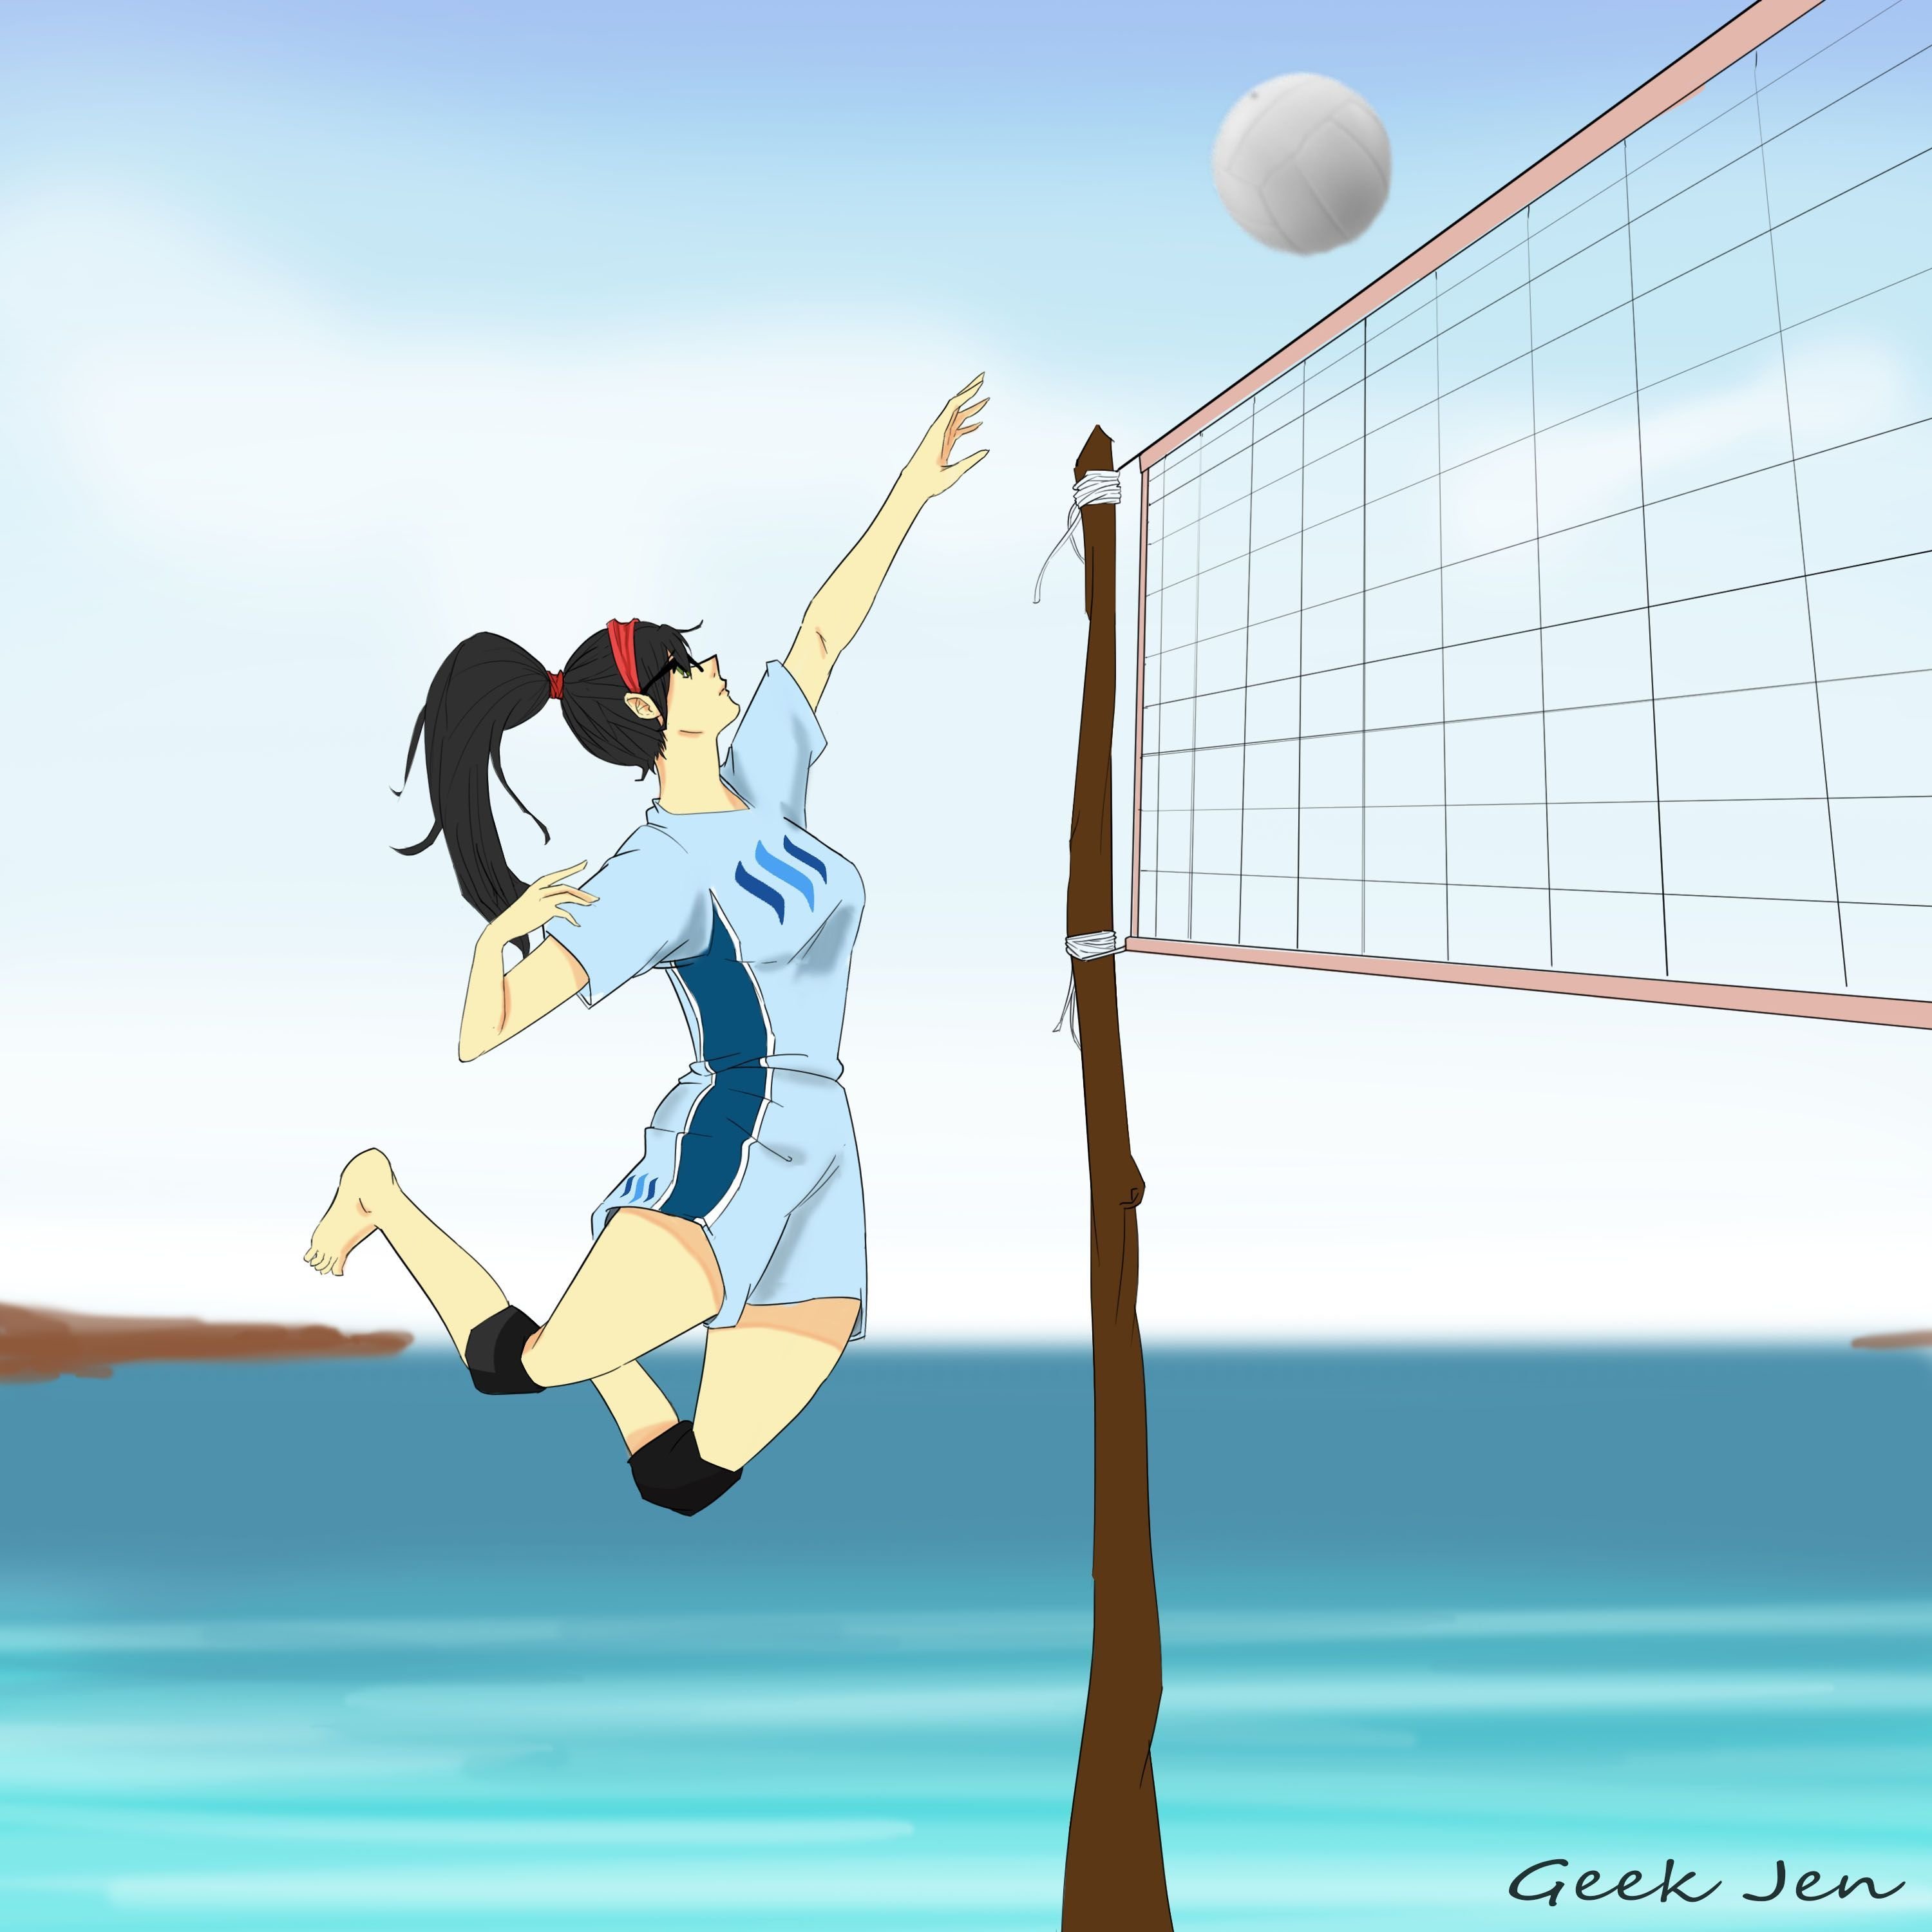 Рисунок волейболиста. Рисунок на тему волейбол. Волейбол фон. Спорт волейбол. Волейбол картинки.